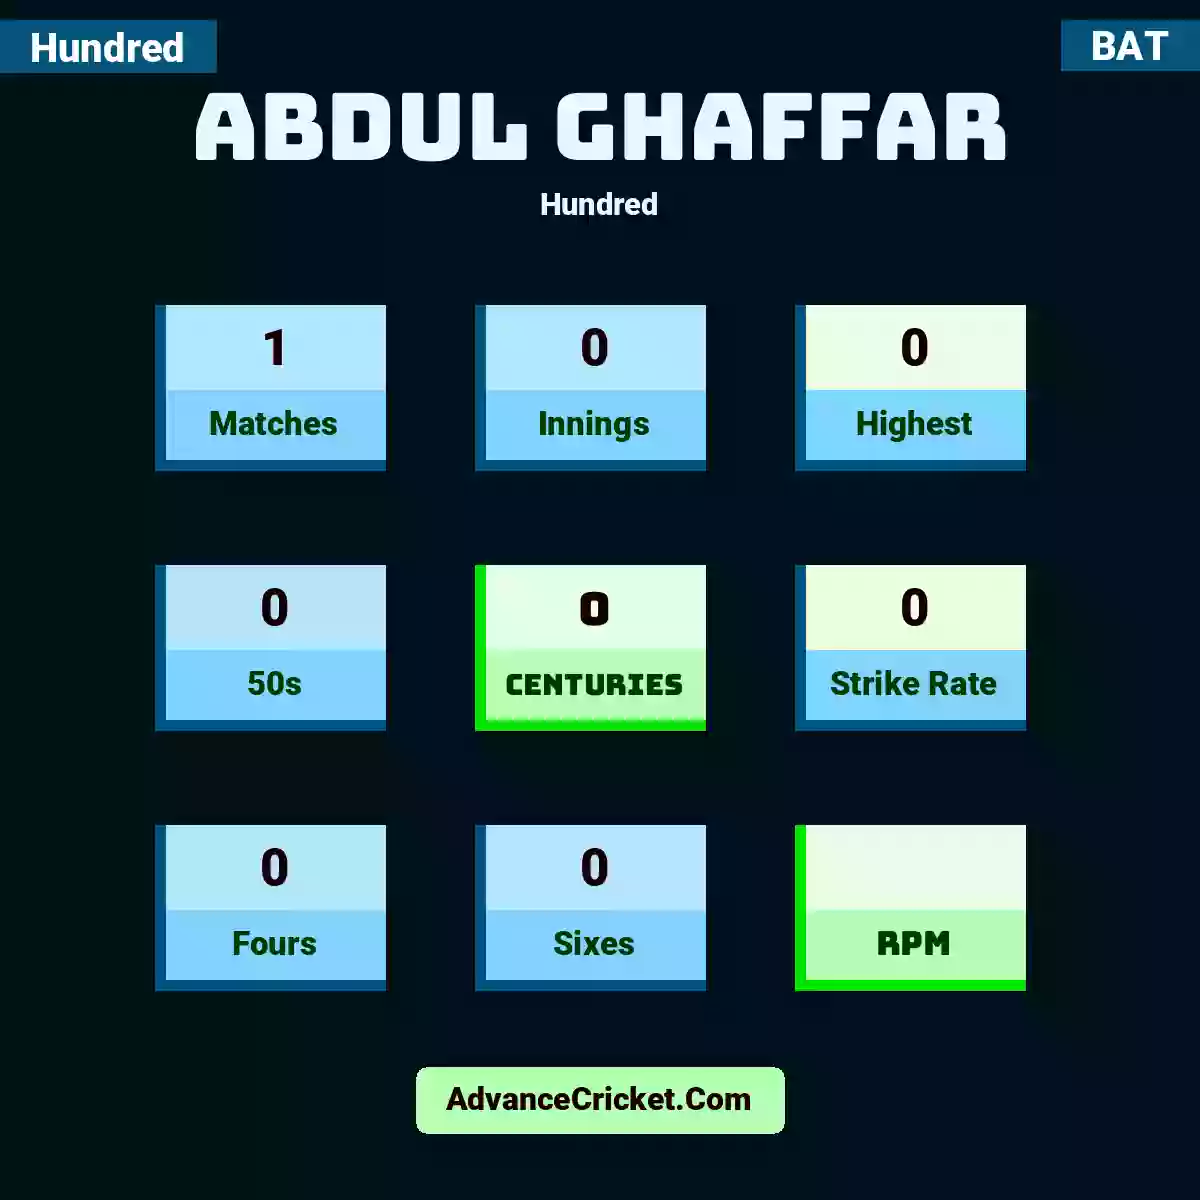 Abdul Ghaffar Hundred , Abdul Ghaffar played 1 matches, scored 0 runs as highest, 0 half-centuries, and 0 centuries, with a strike rate of 0. A.Ghaffar hit 0 fours and 0 sixes.